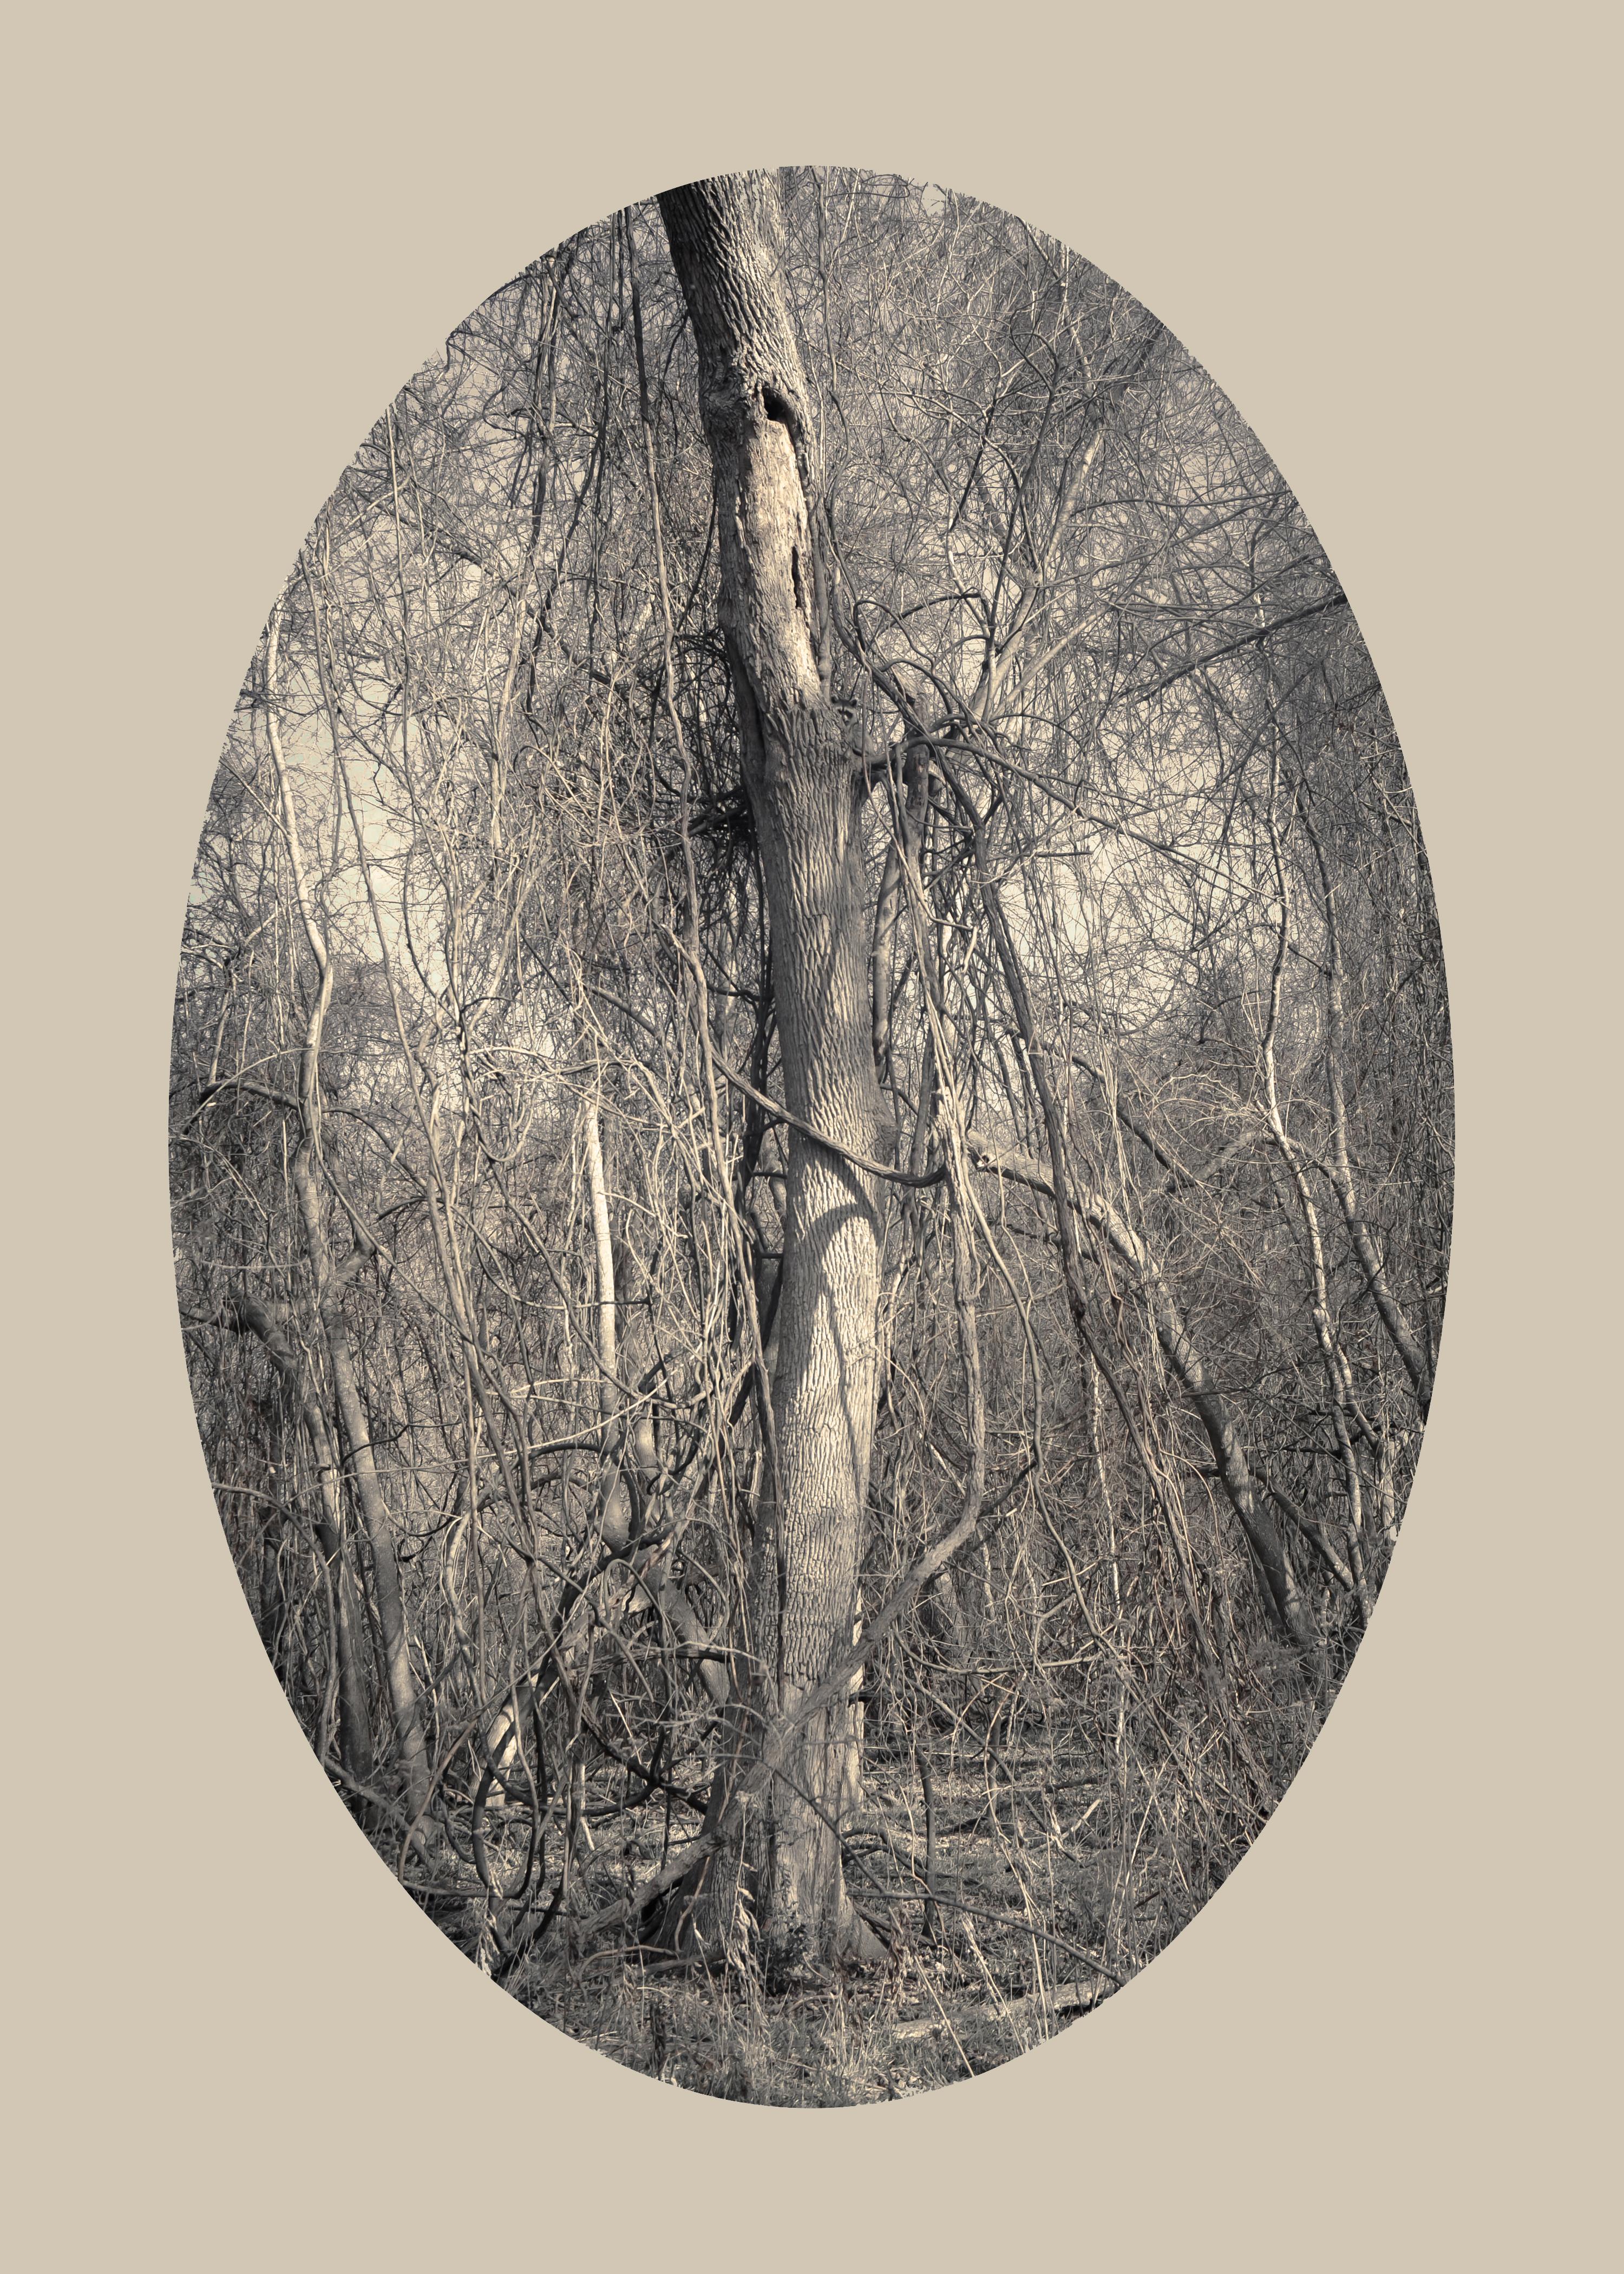 Kate Breakey Landscape Photograph - Tree with Vines, Plum Creek, Texas